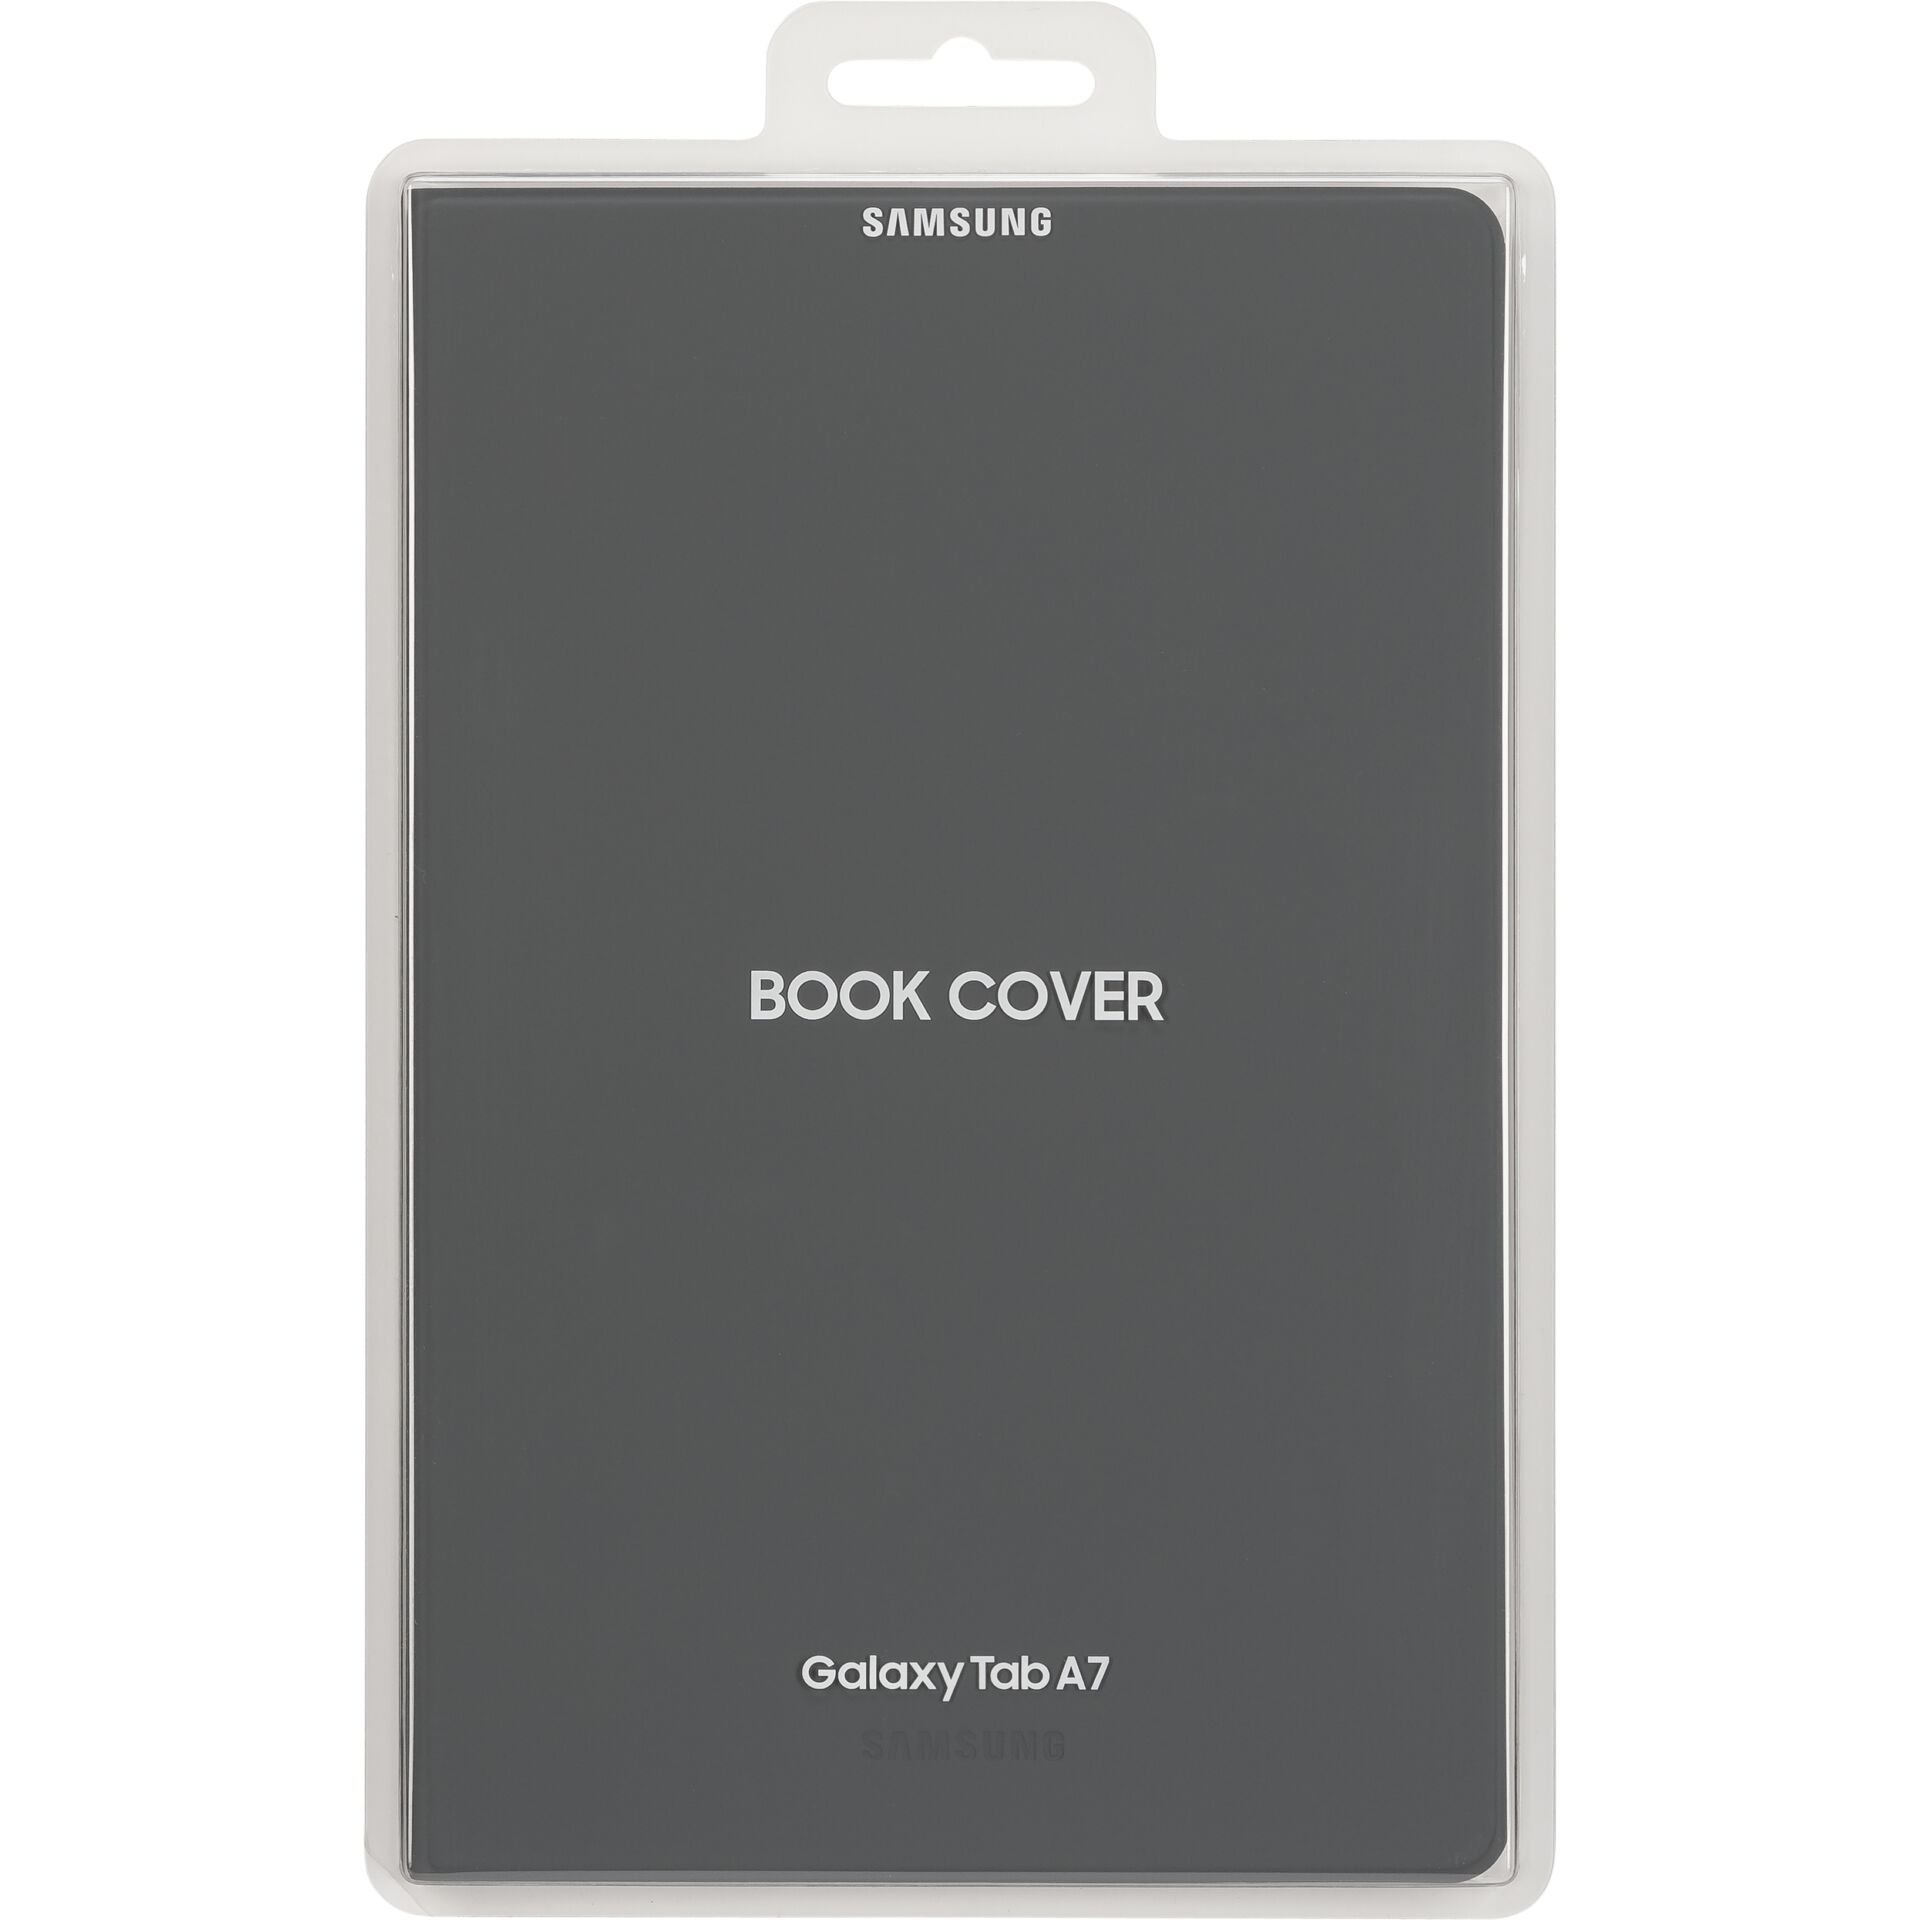 Samsung Book Cover Tab A7 grey